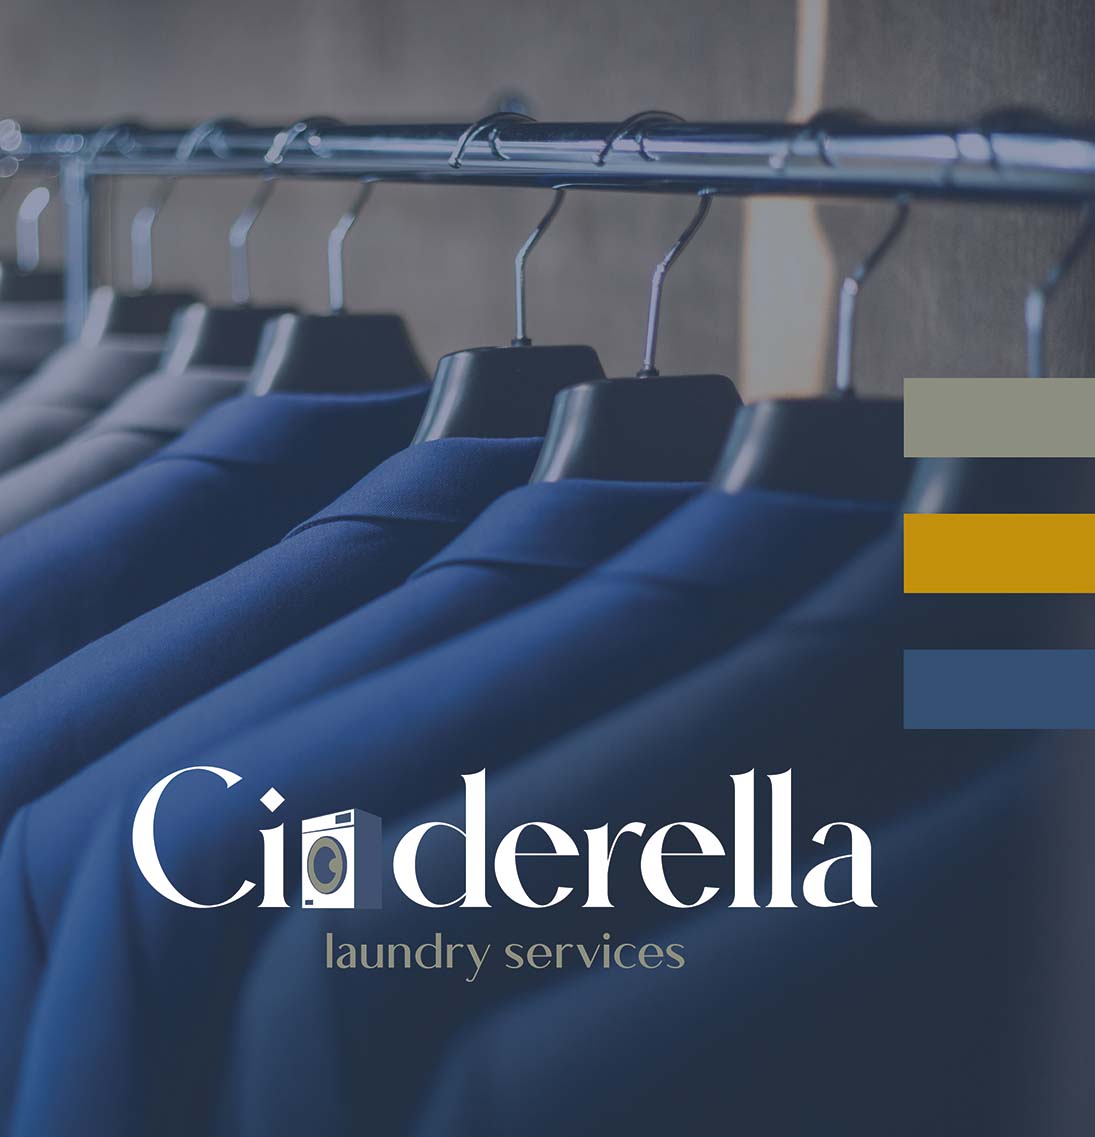 Cinderella Laundry services Brand identity